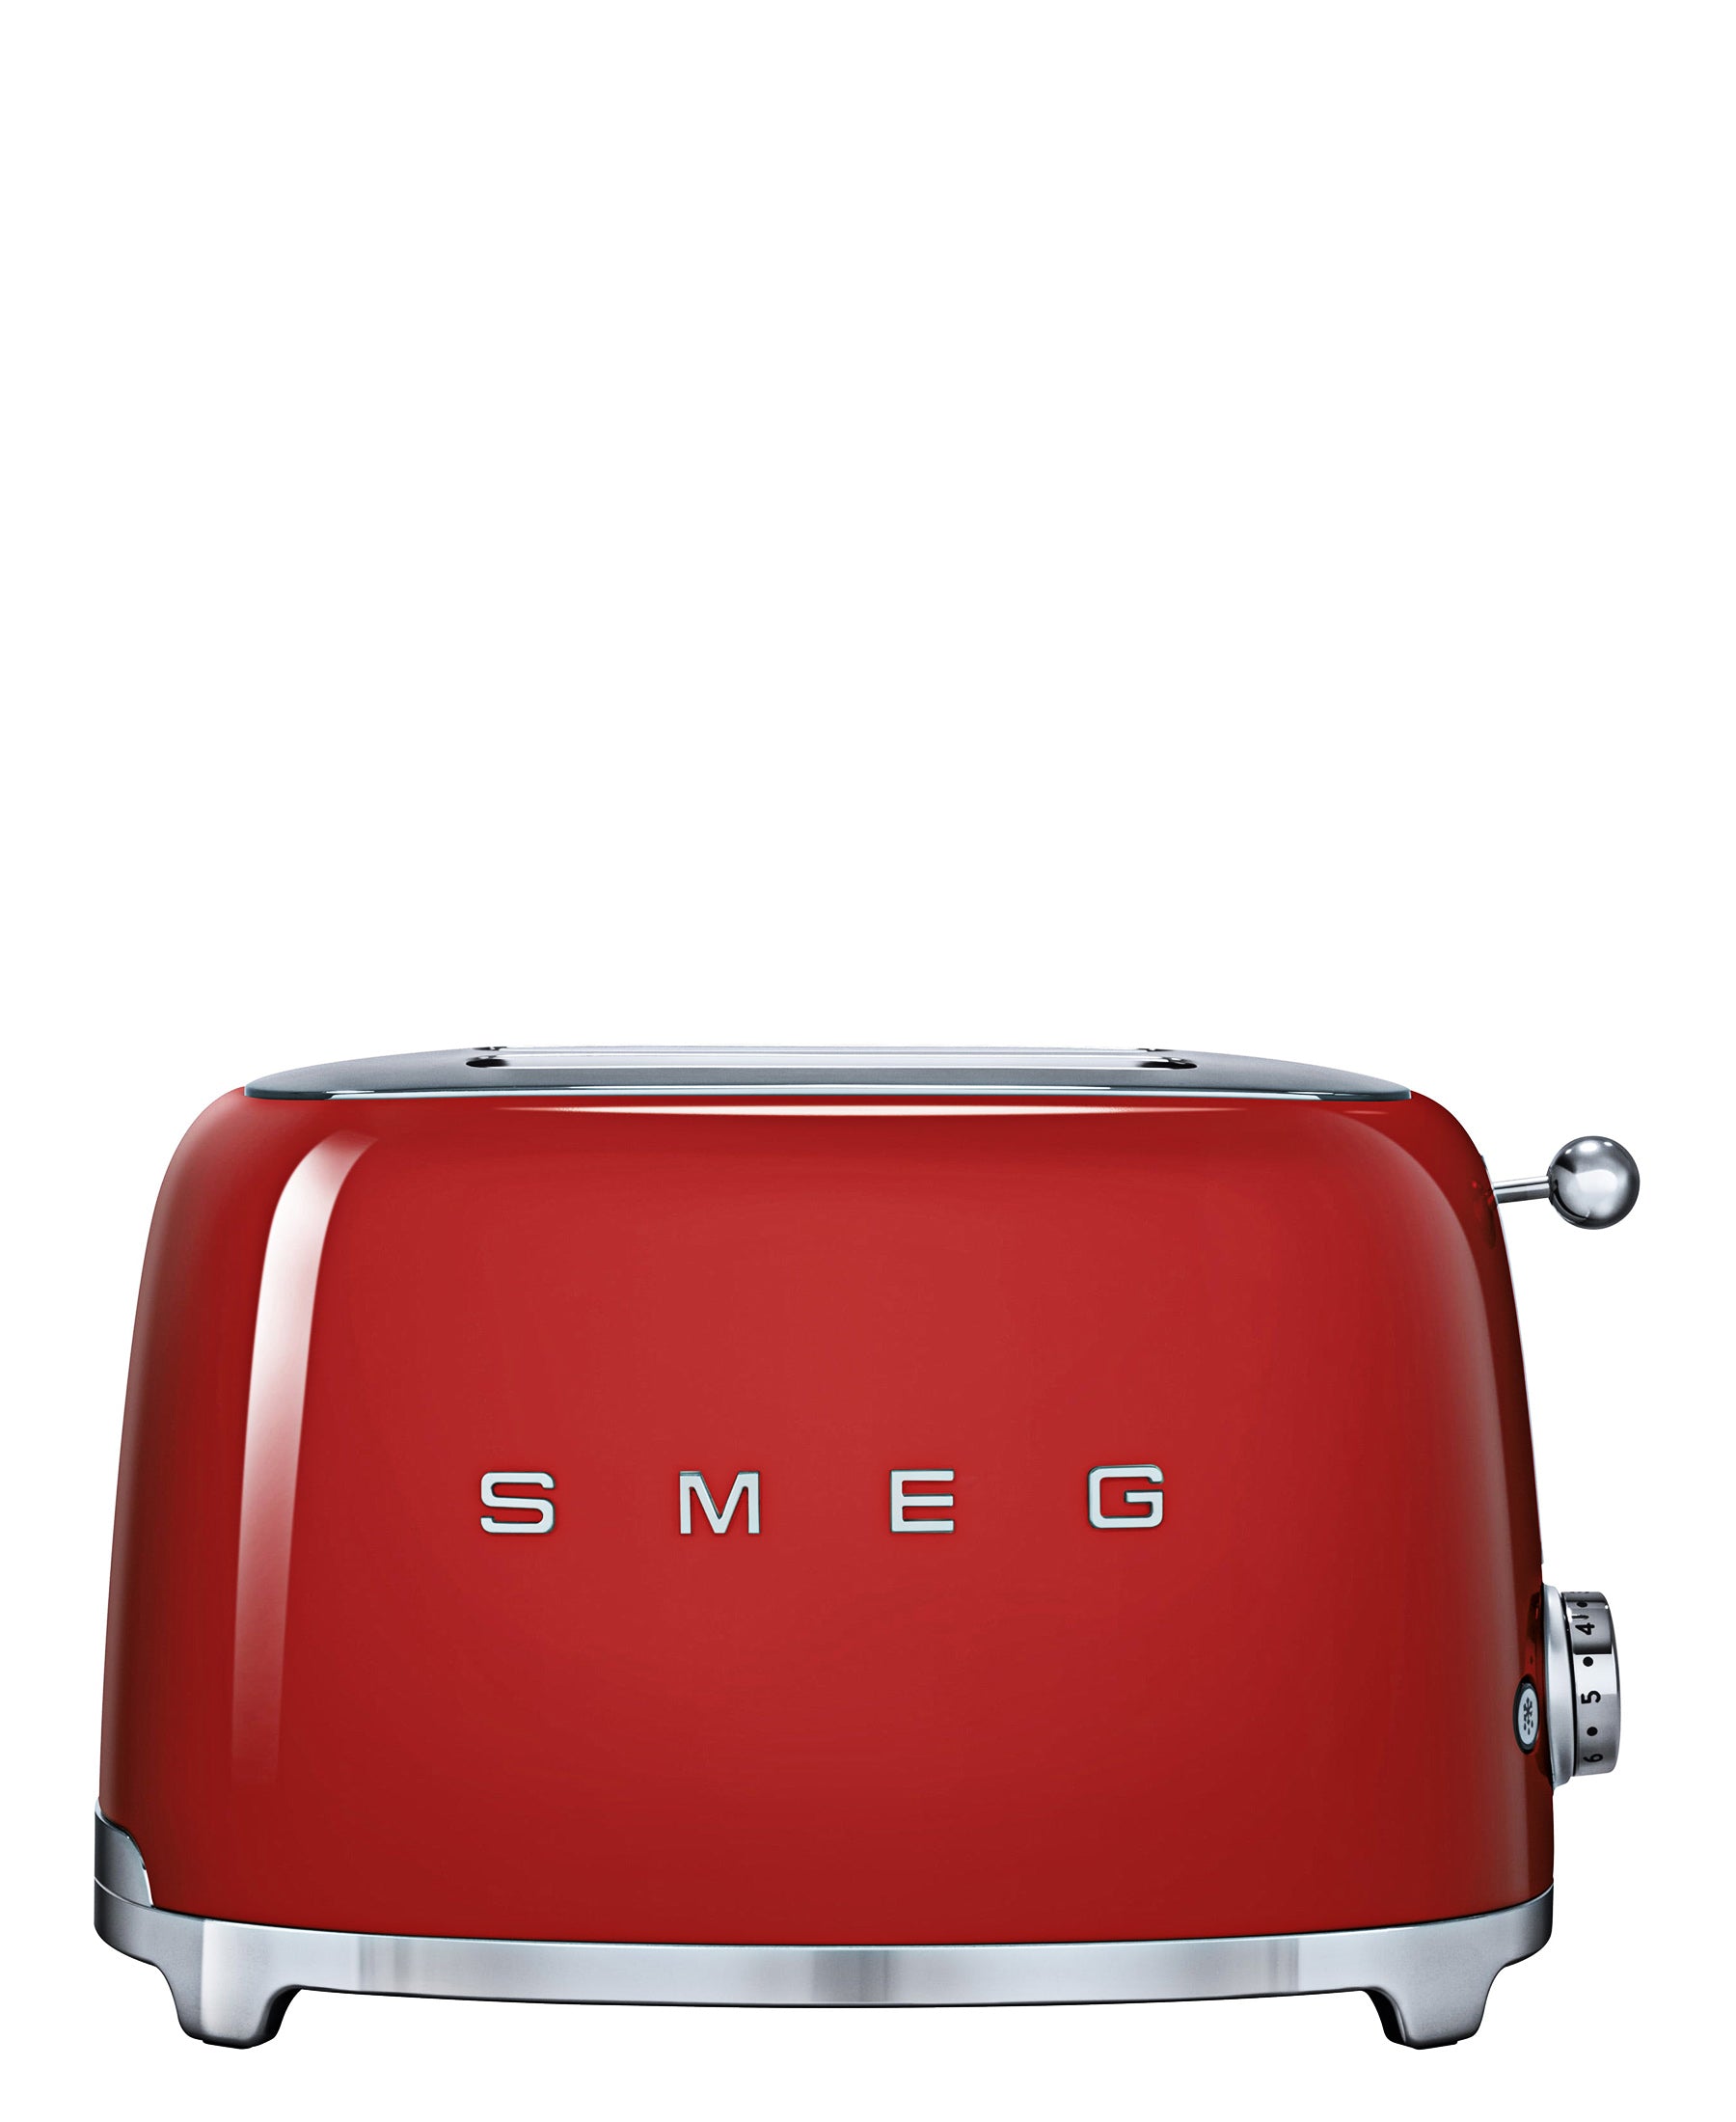 Smeg Retro 2 Slice Toaster - Red